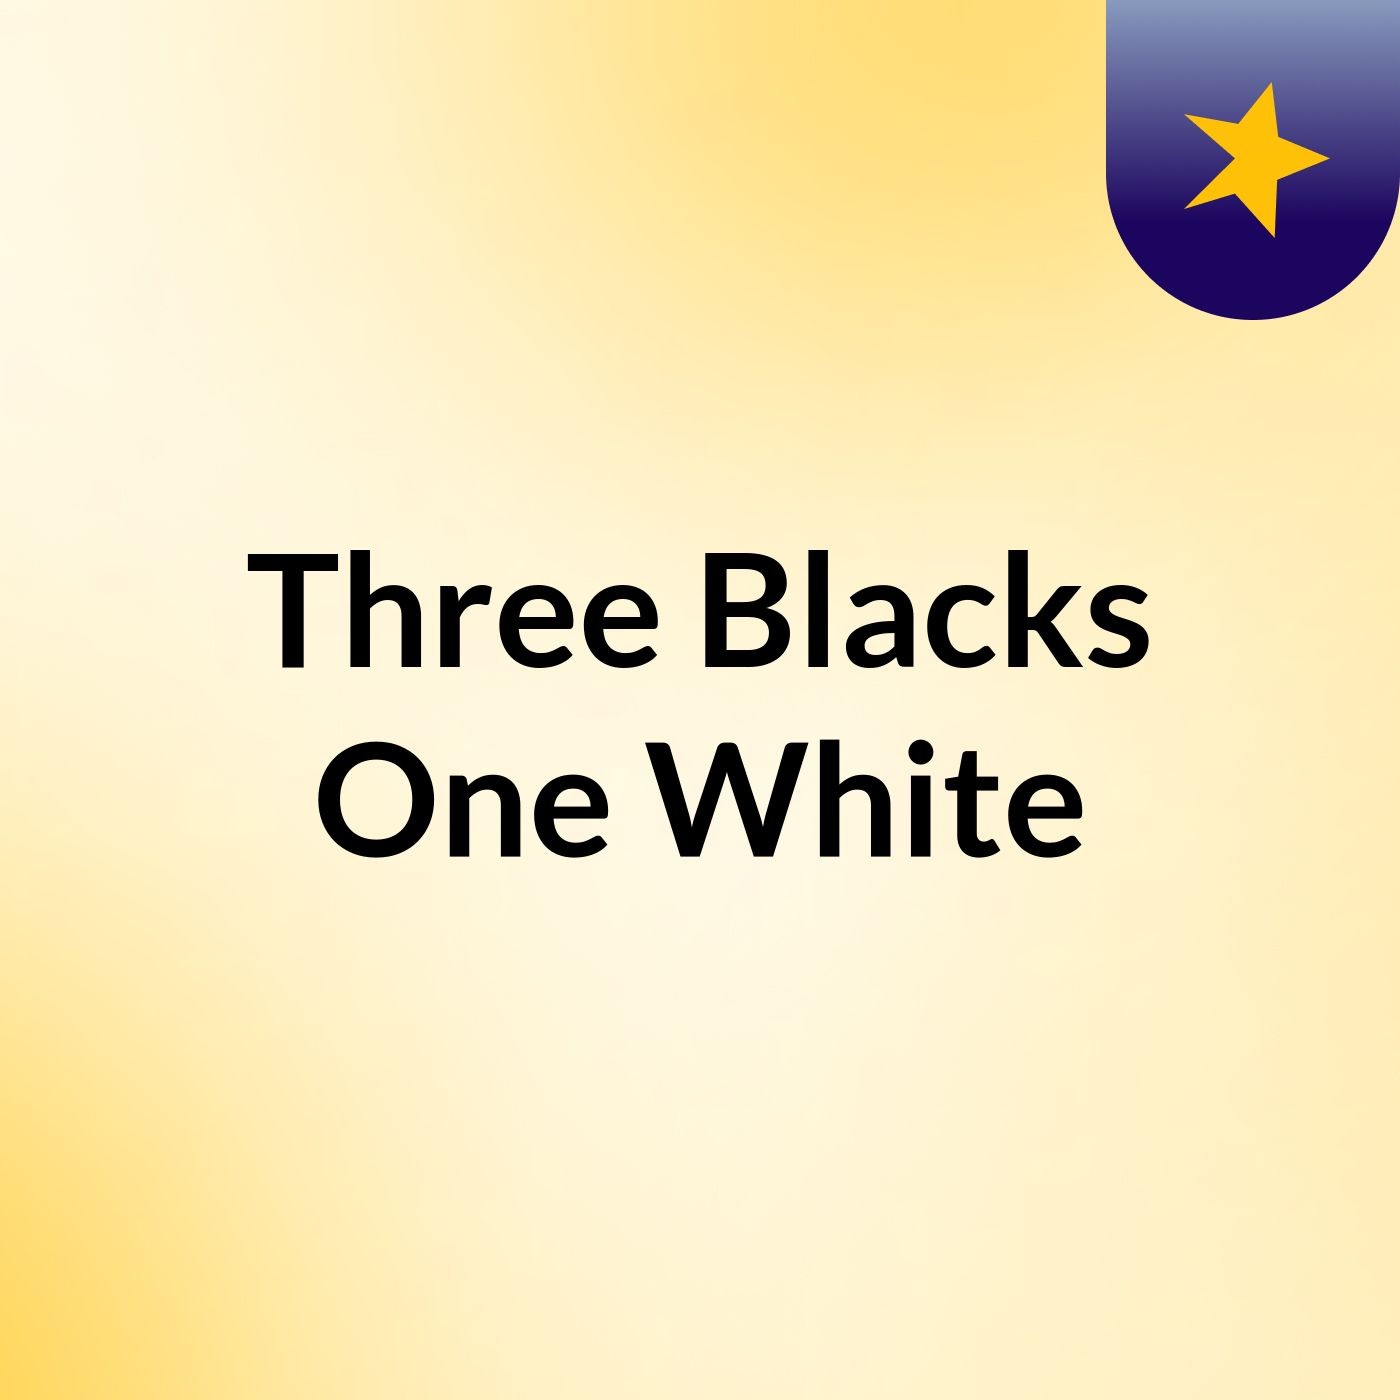 Three Blacks One White